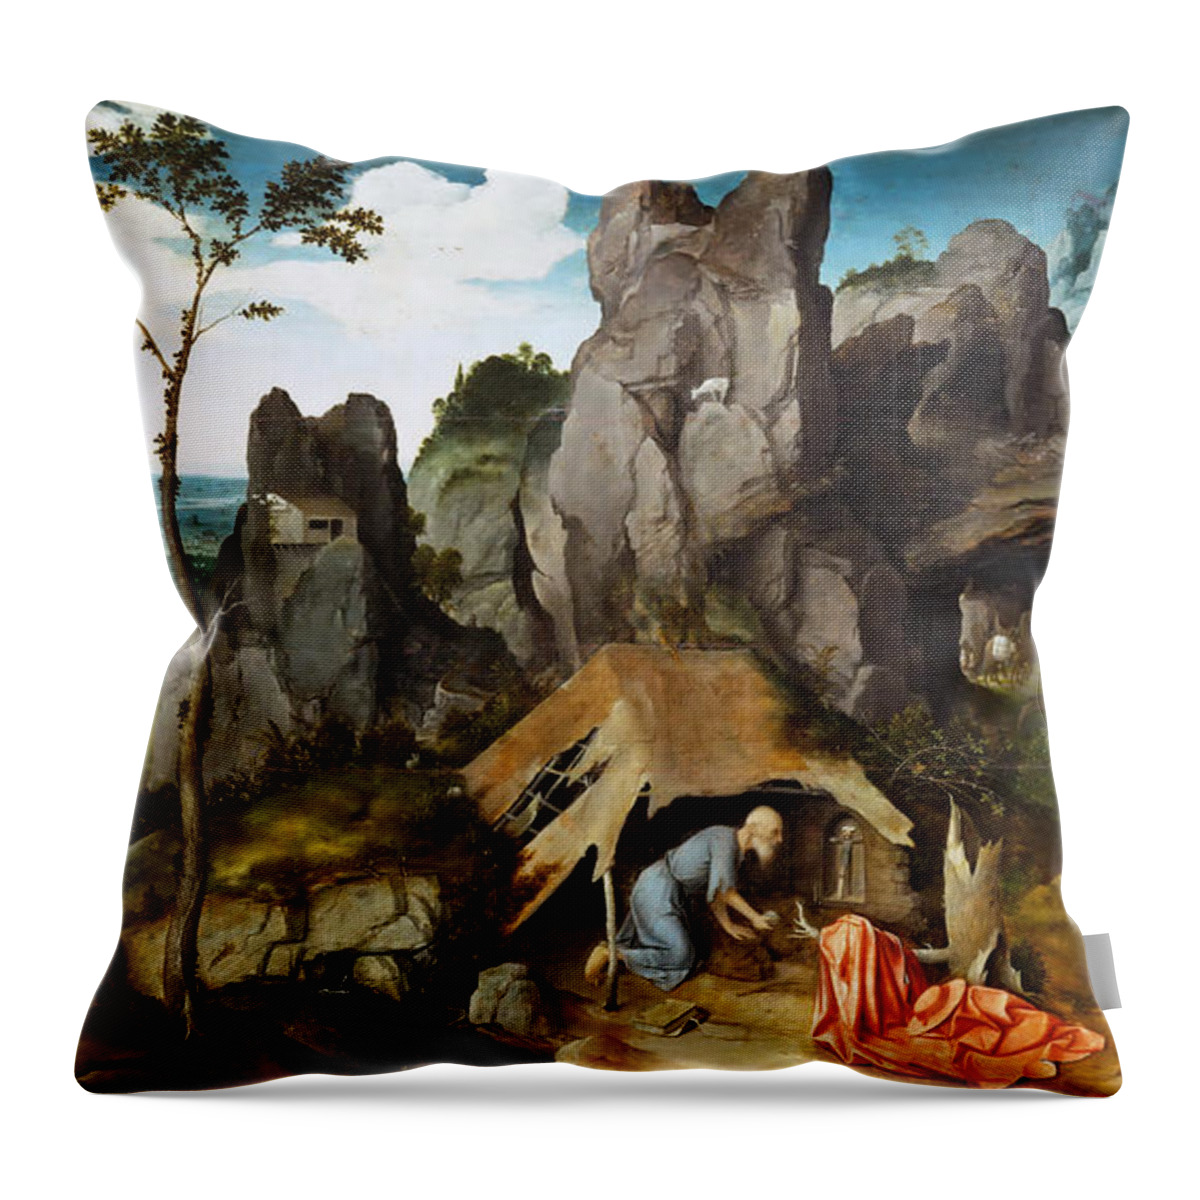 Joachim Patinir Throw Pillow featuring the painting Saint Jerome in the Desert by Joachim Patinir